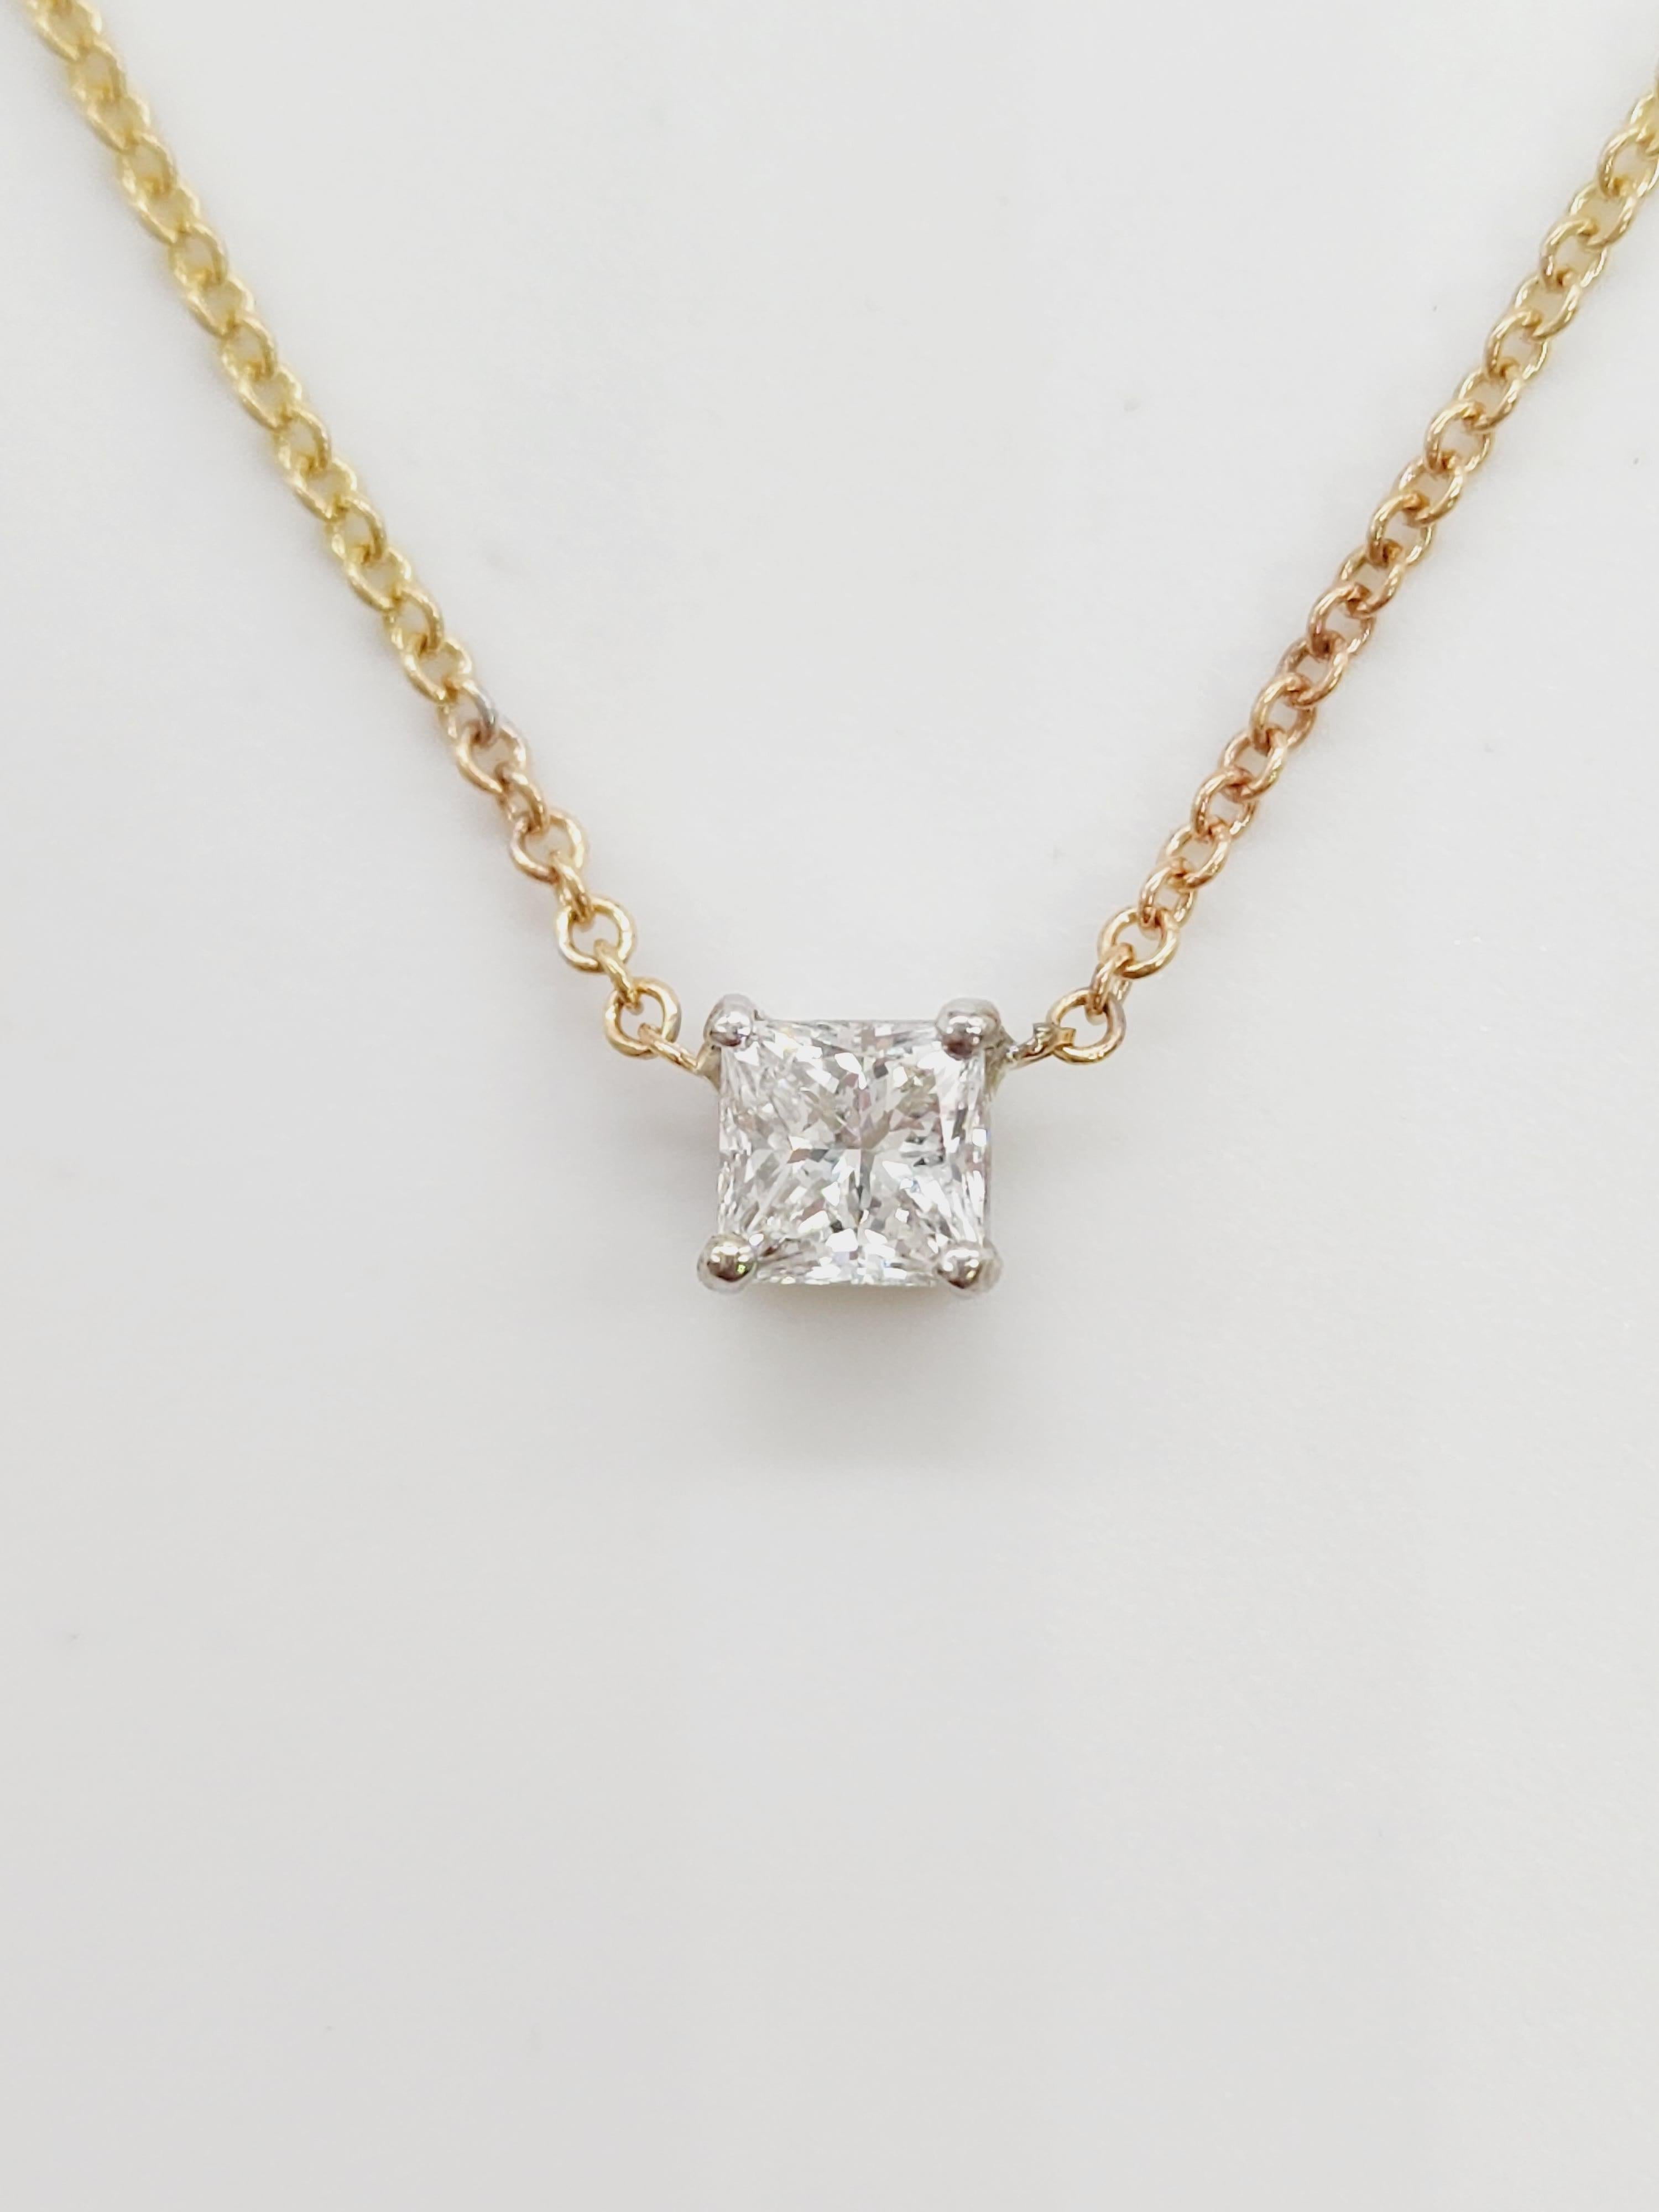 0.41 Natural Princess shape diamond pendant. set in 14k yellow gold. 4 prong set, chain measures 18 inch.